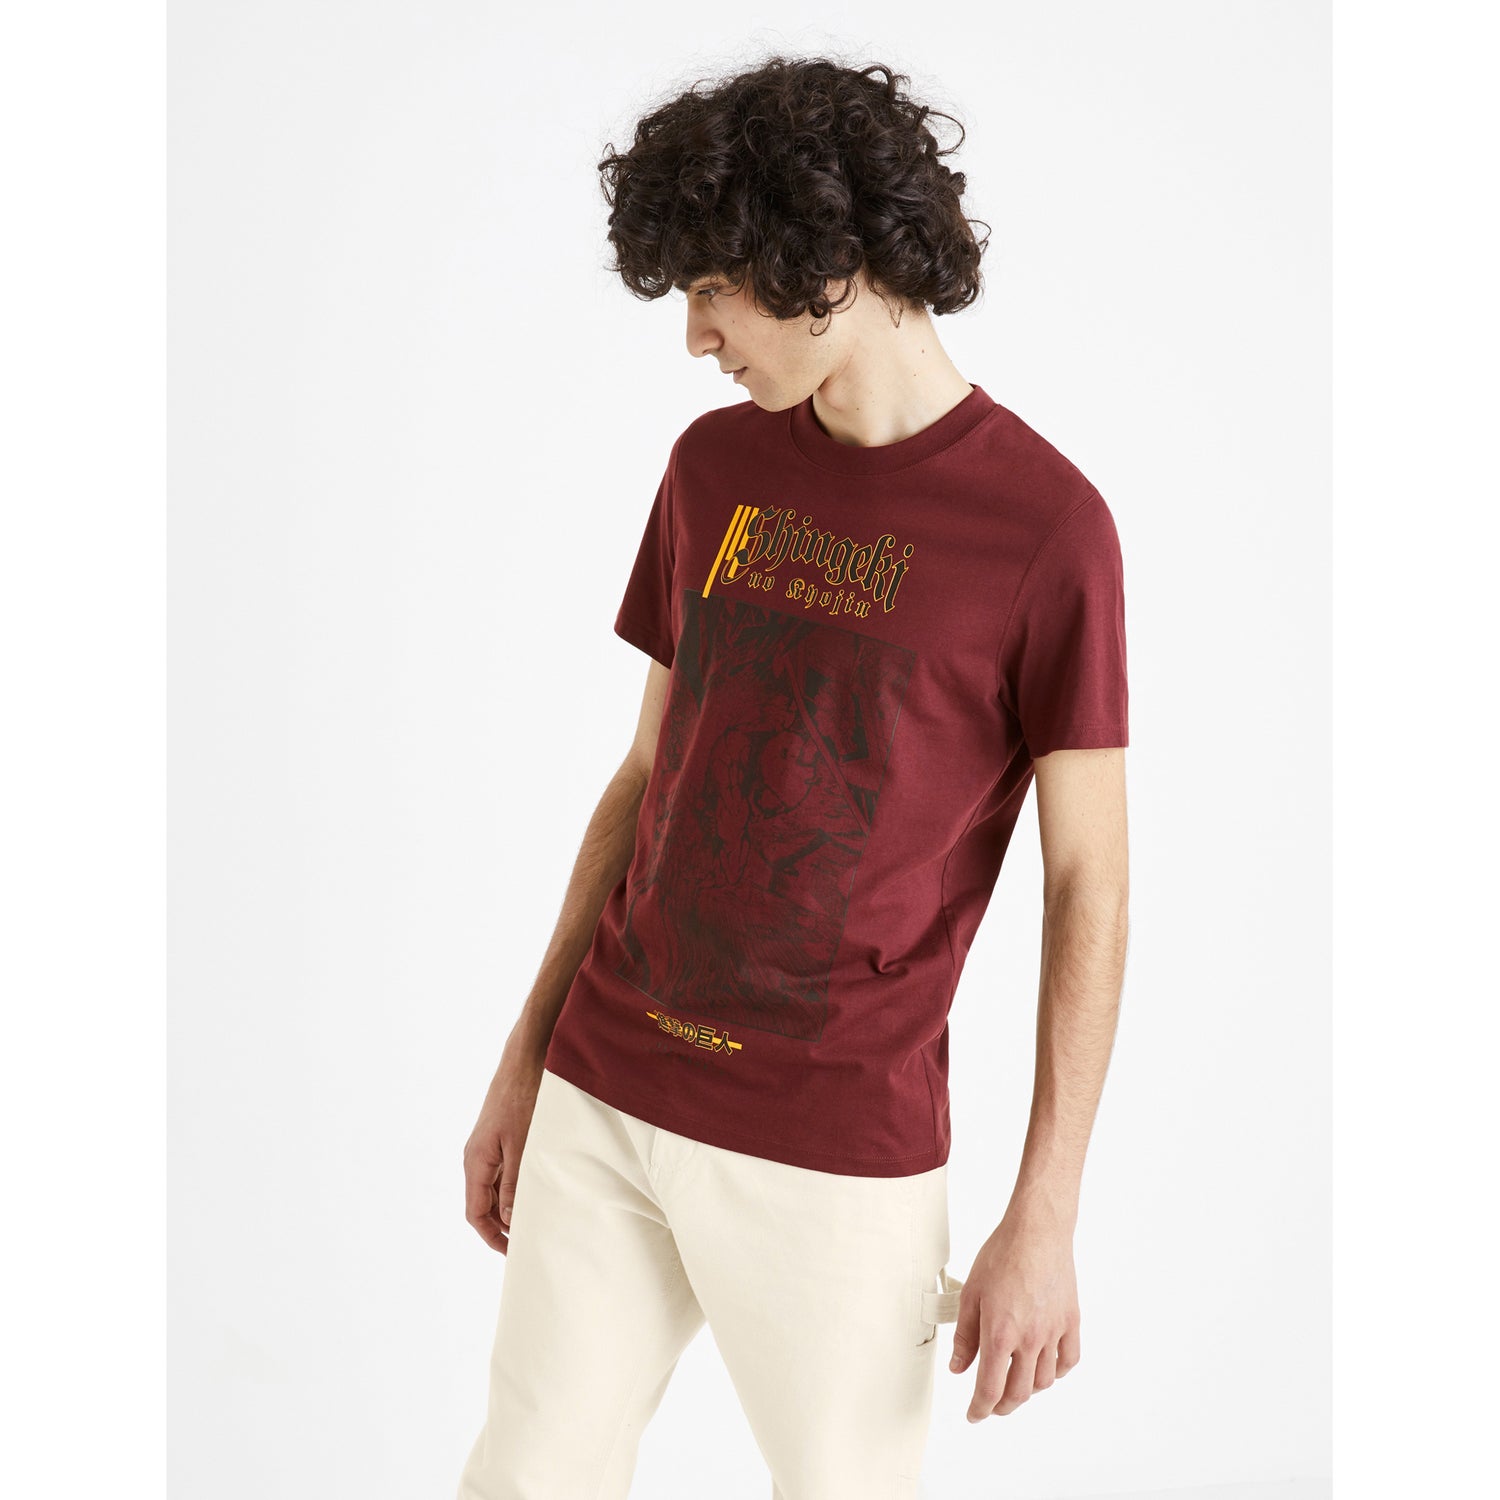 Attack on Titan - Burgundy Printed Tshirt (LCEAOT)